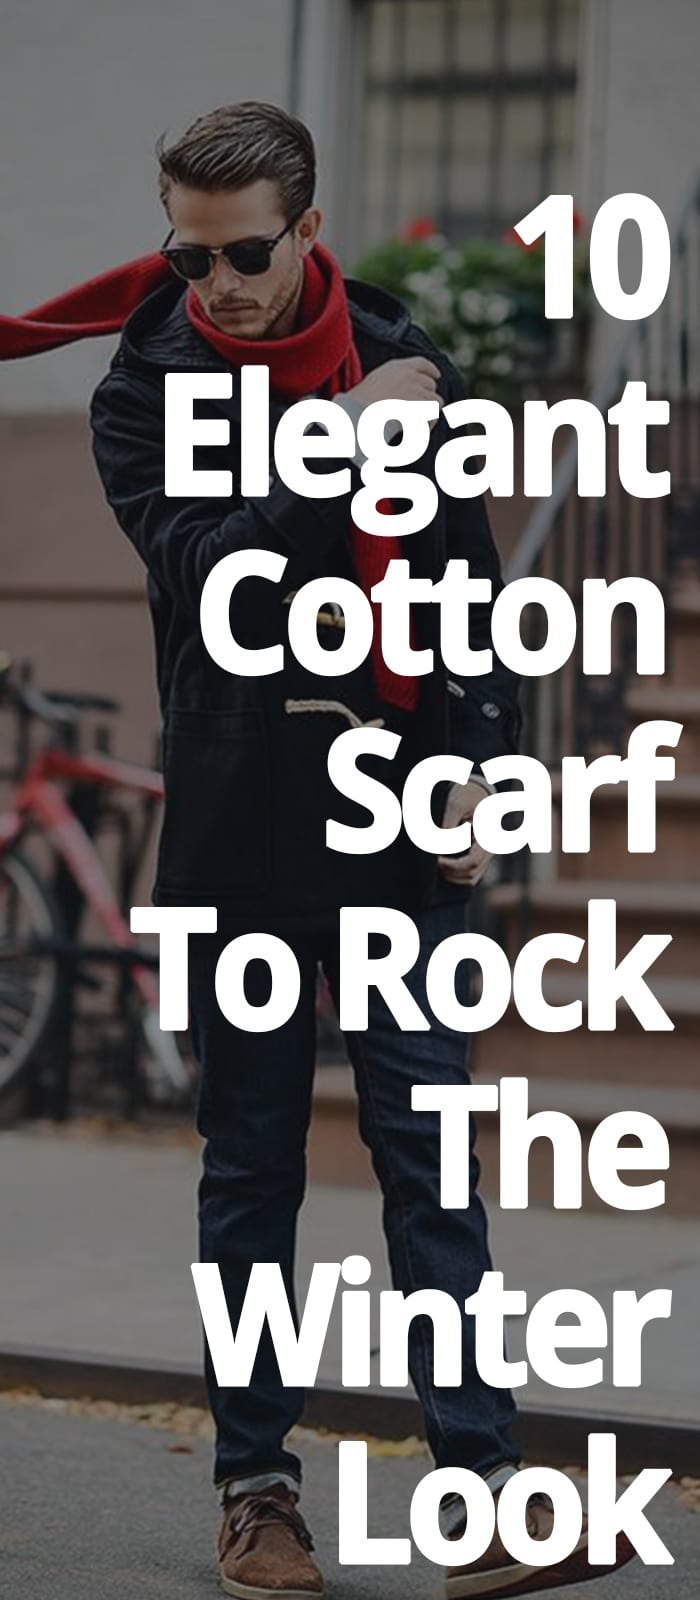 10 ELEGANT COTTON SCARF TO ROCK THE WINTER